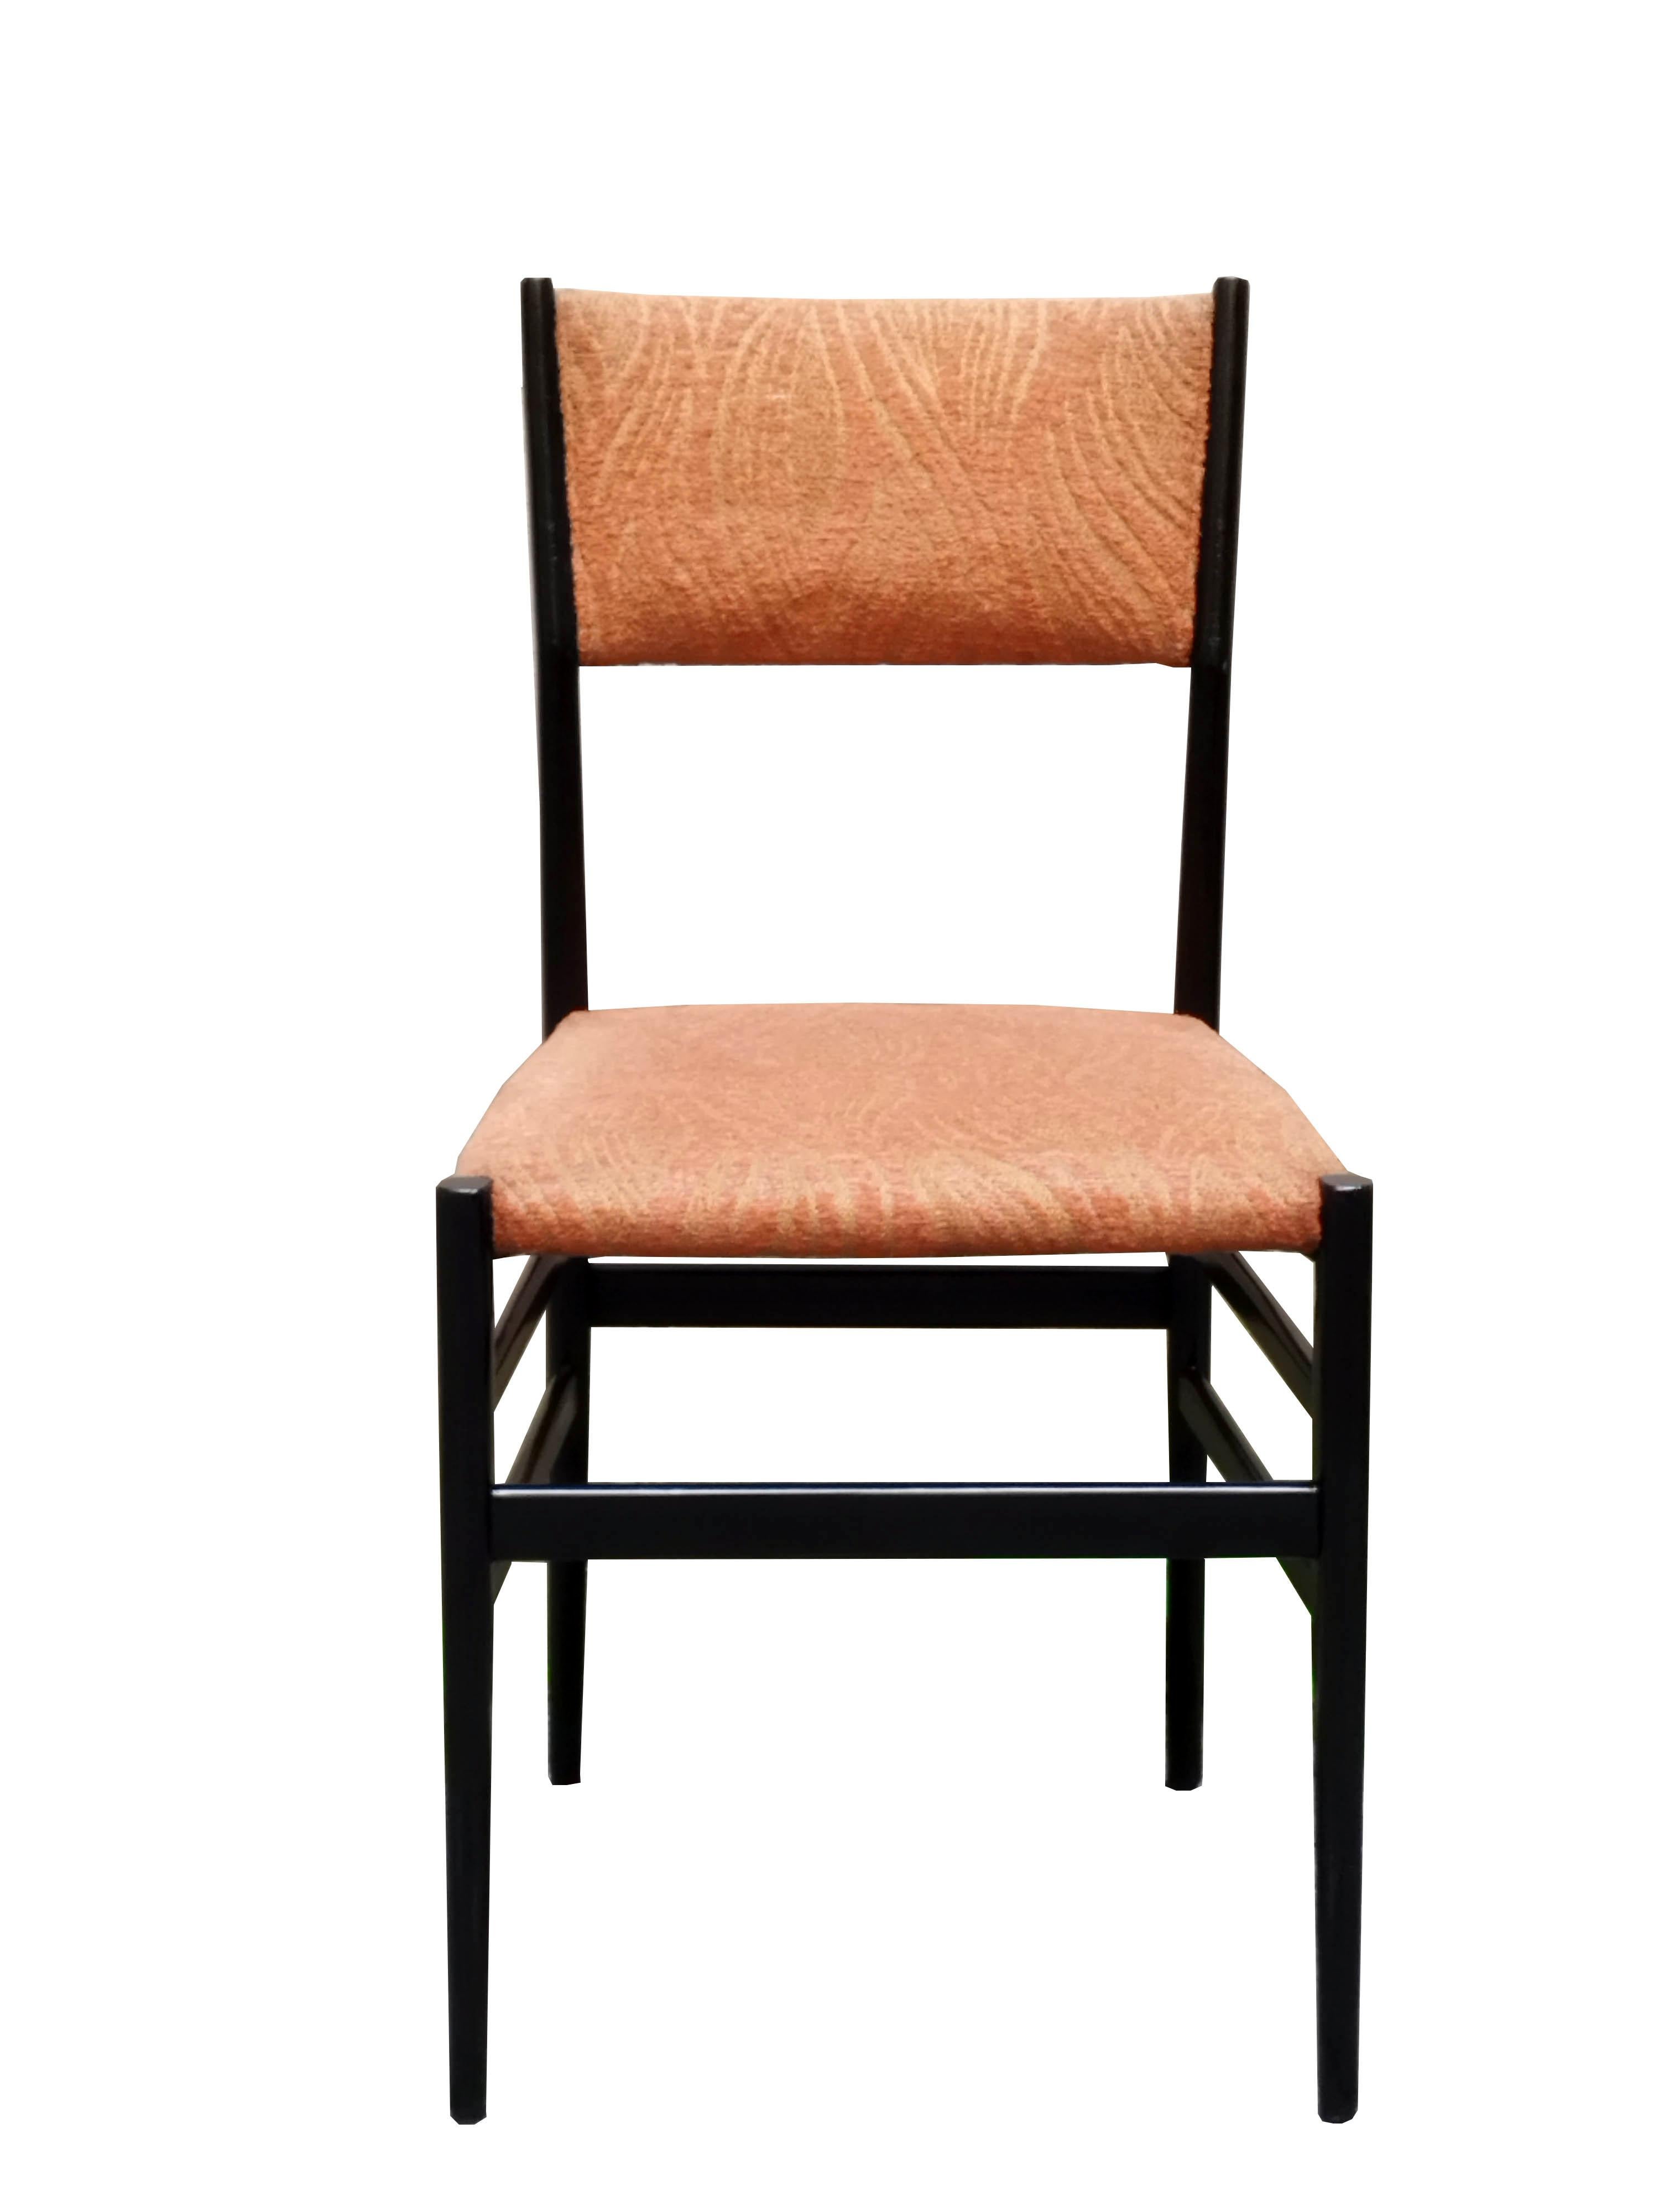 Italian Gio Ponti for Cassina Set of 6 Leggera Chairs, Italy, 1950s For Sale